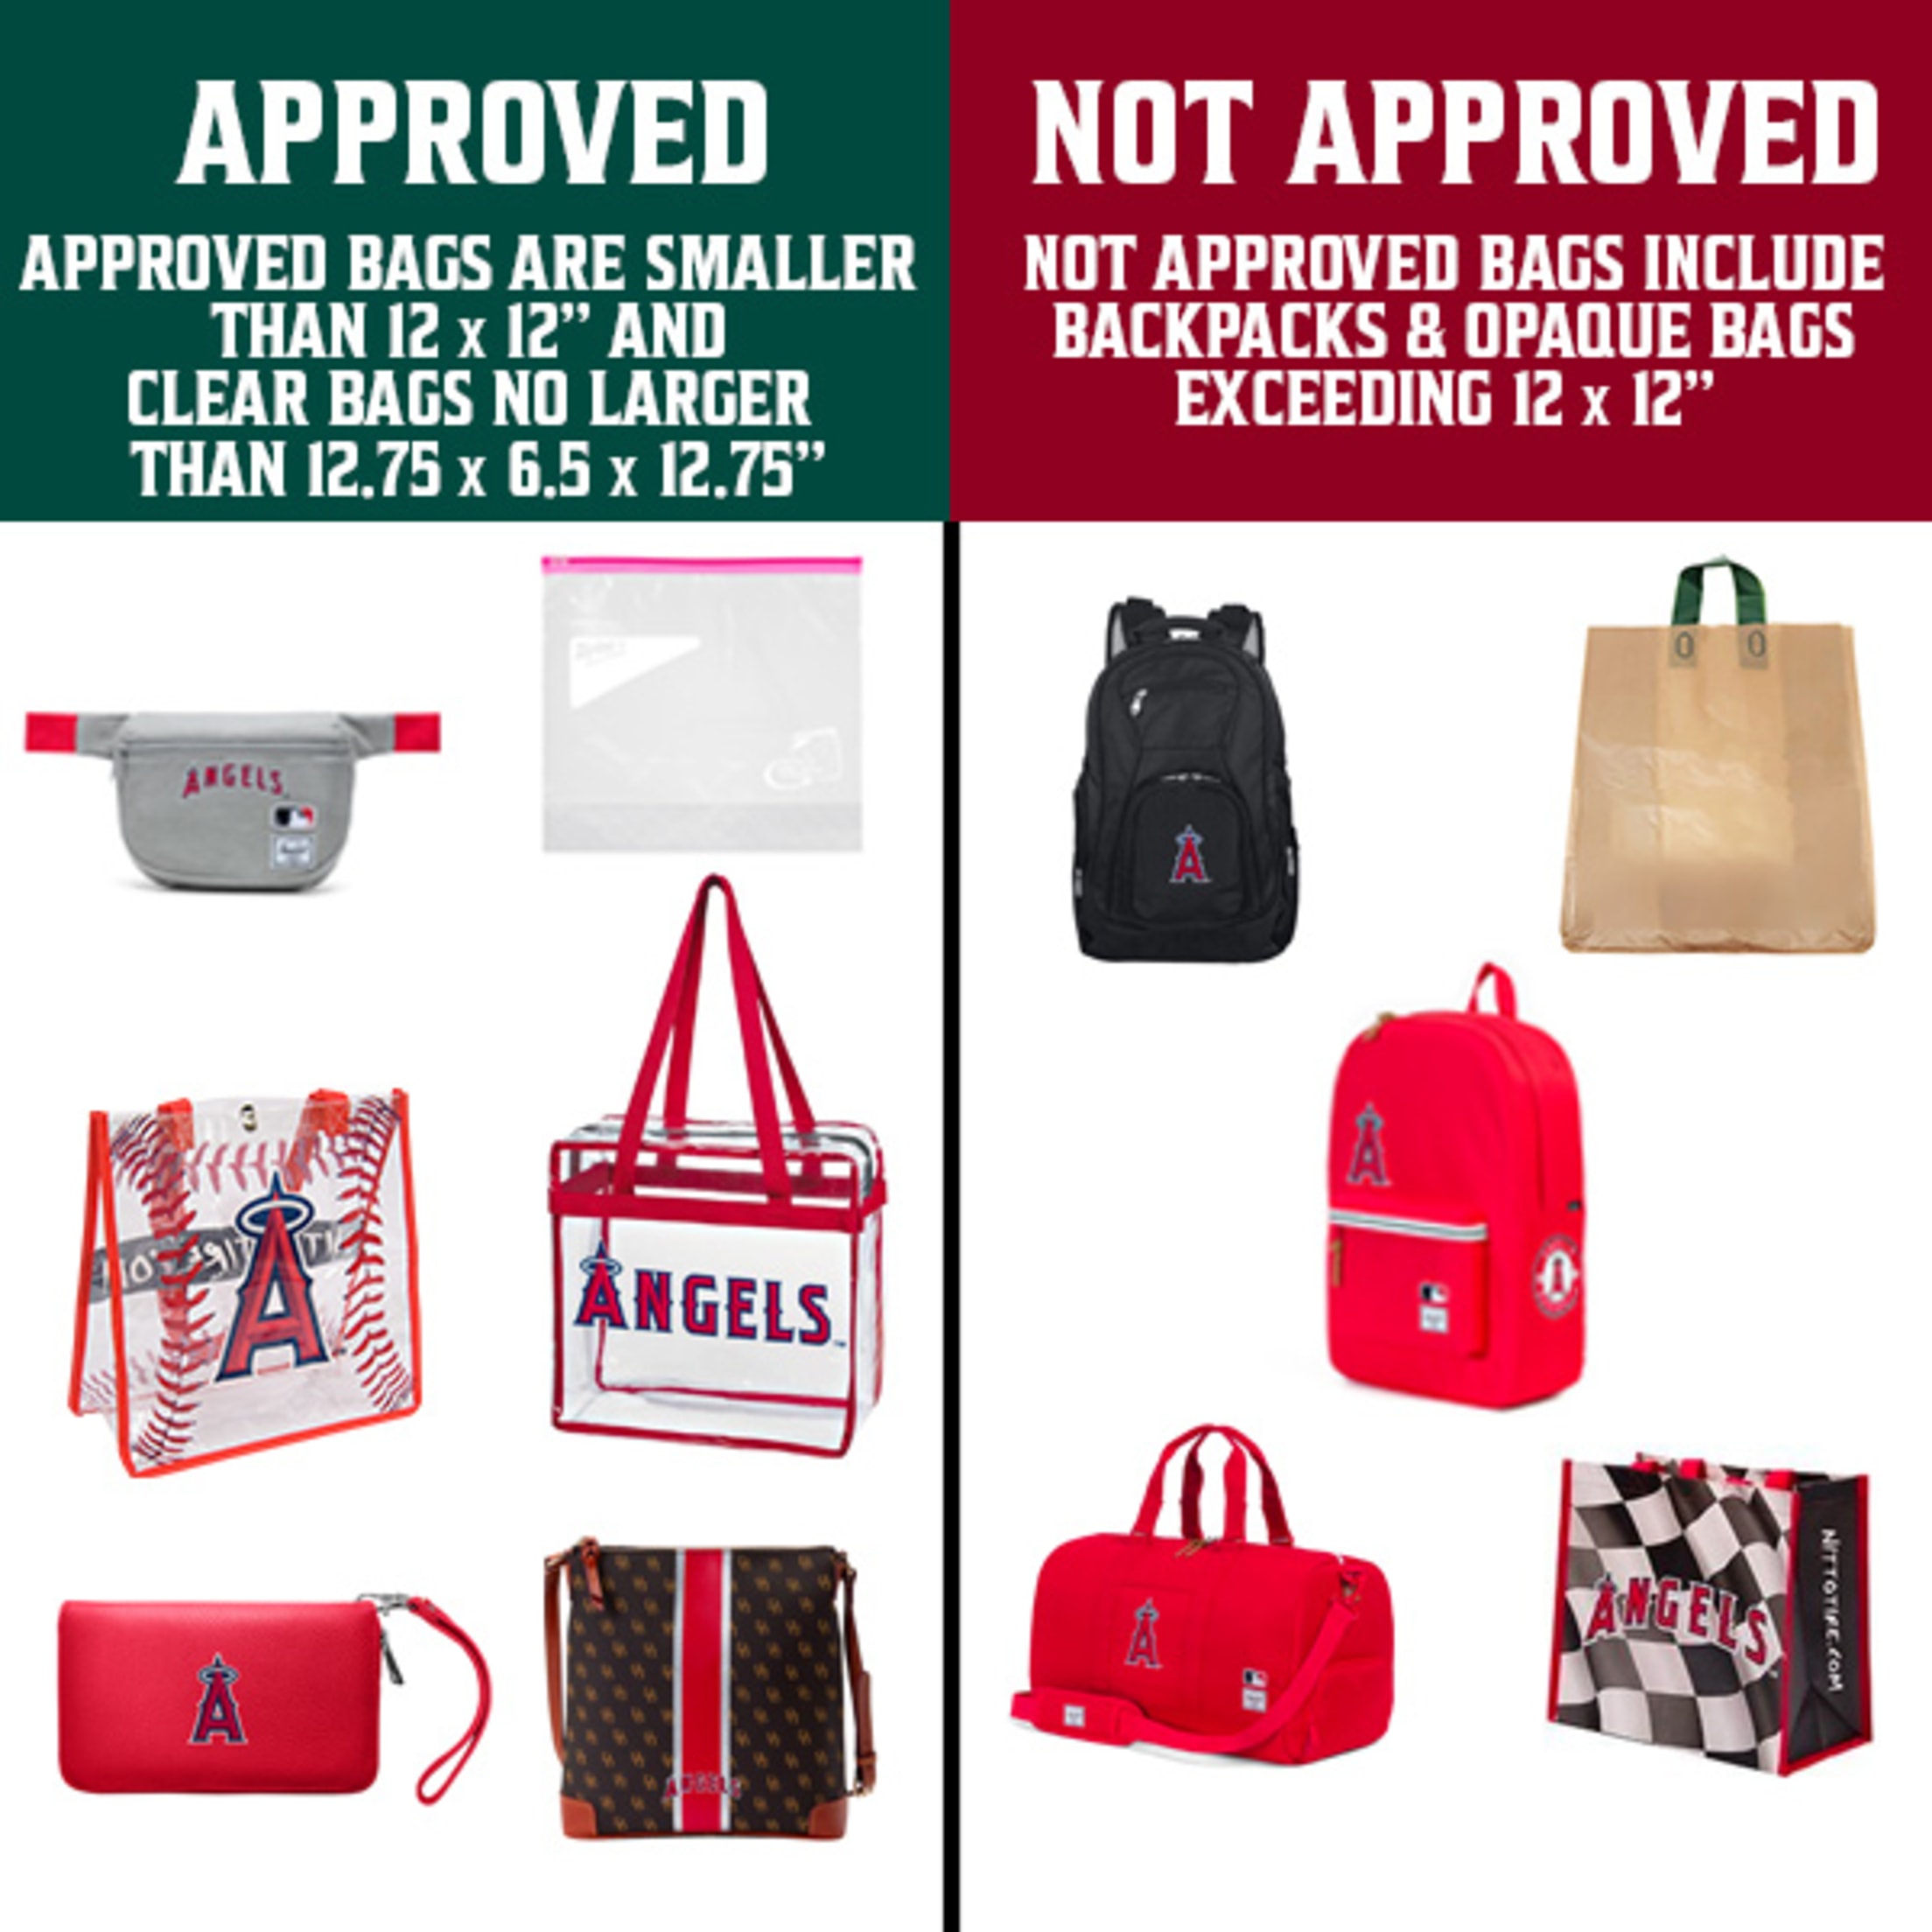 NFL Details Stadium Bag Policy